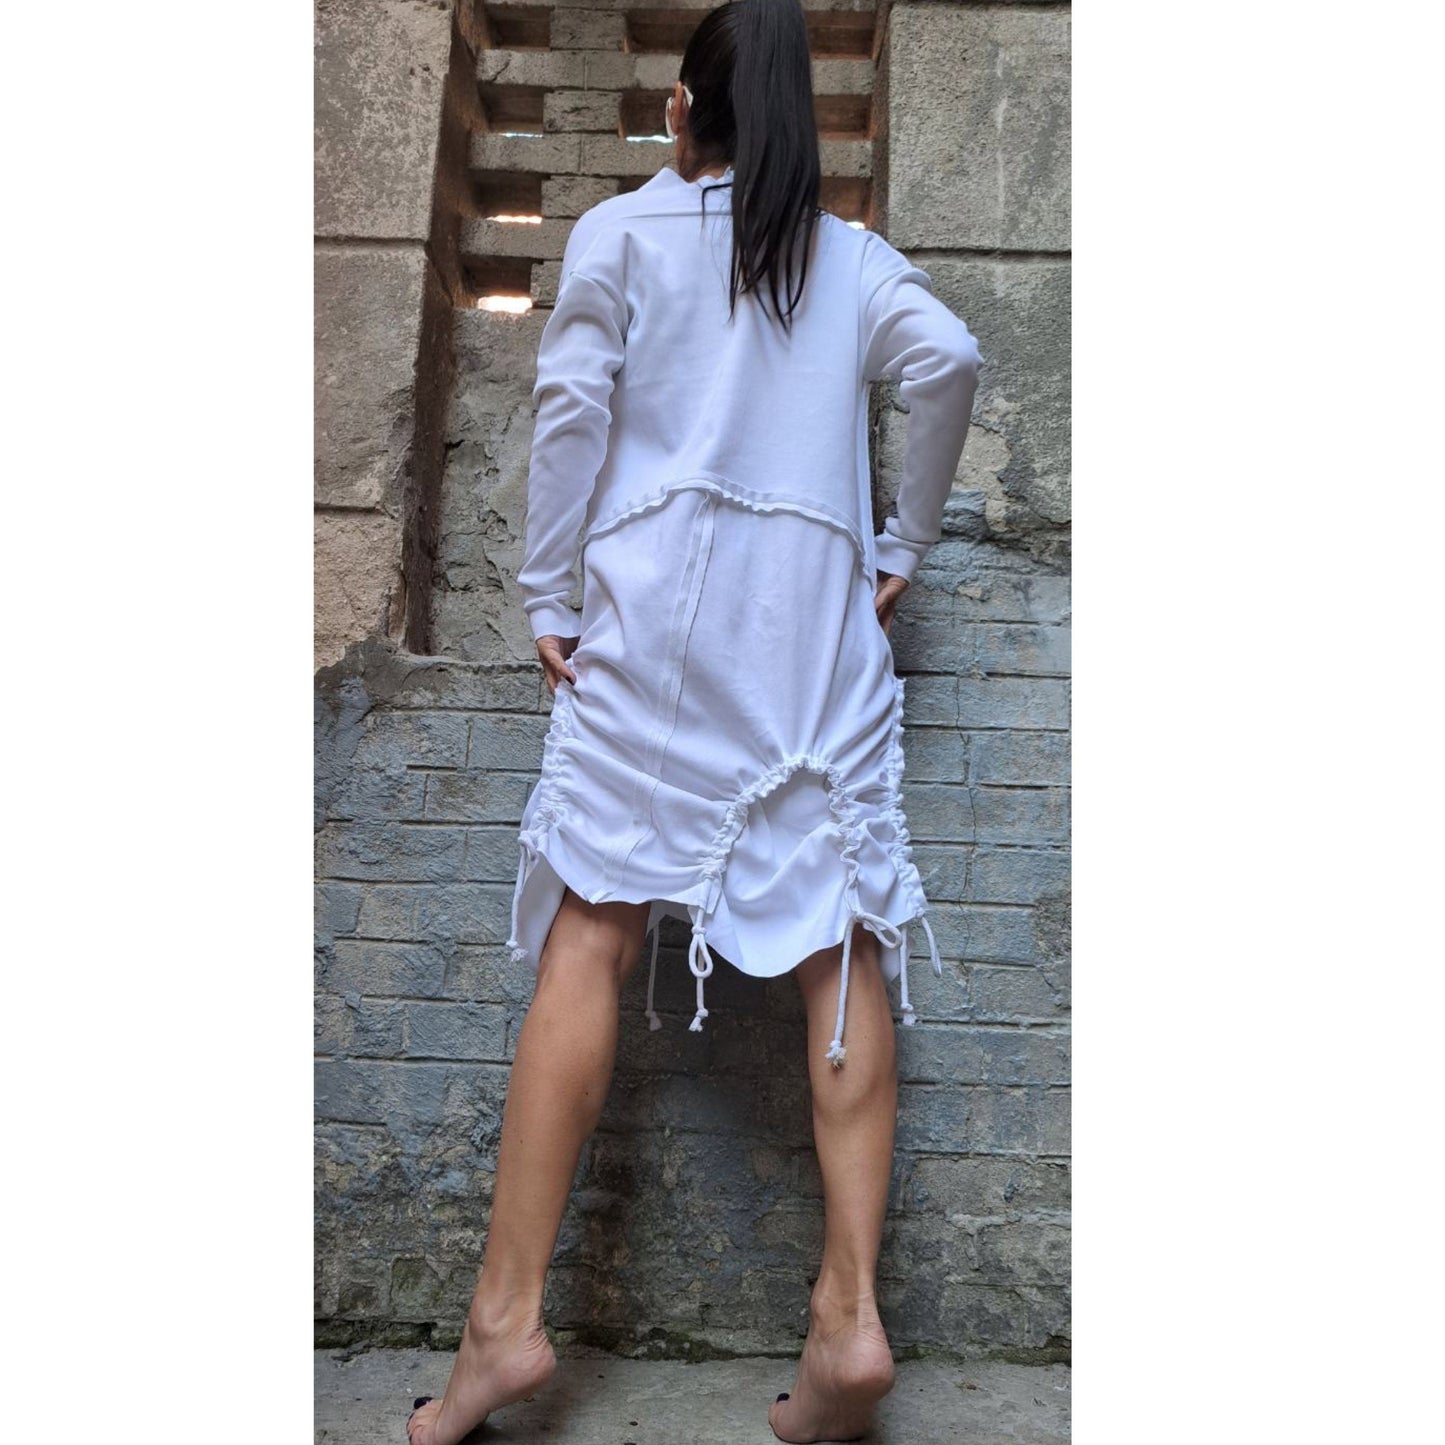 New Streetwear White Dress - Handmade clothing from AngelBySilvia - Top Designer Brands 